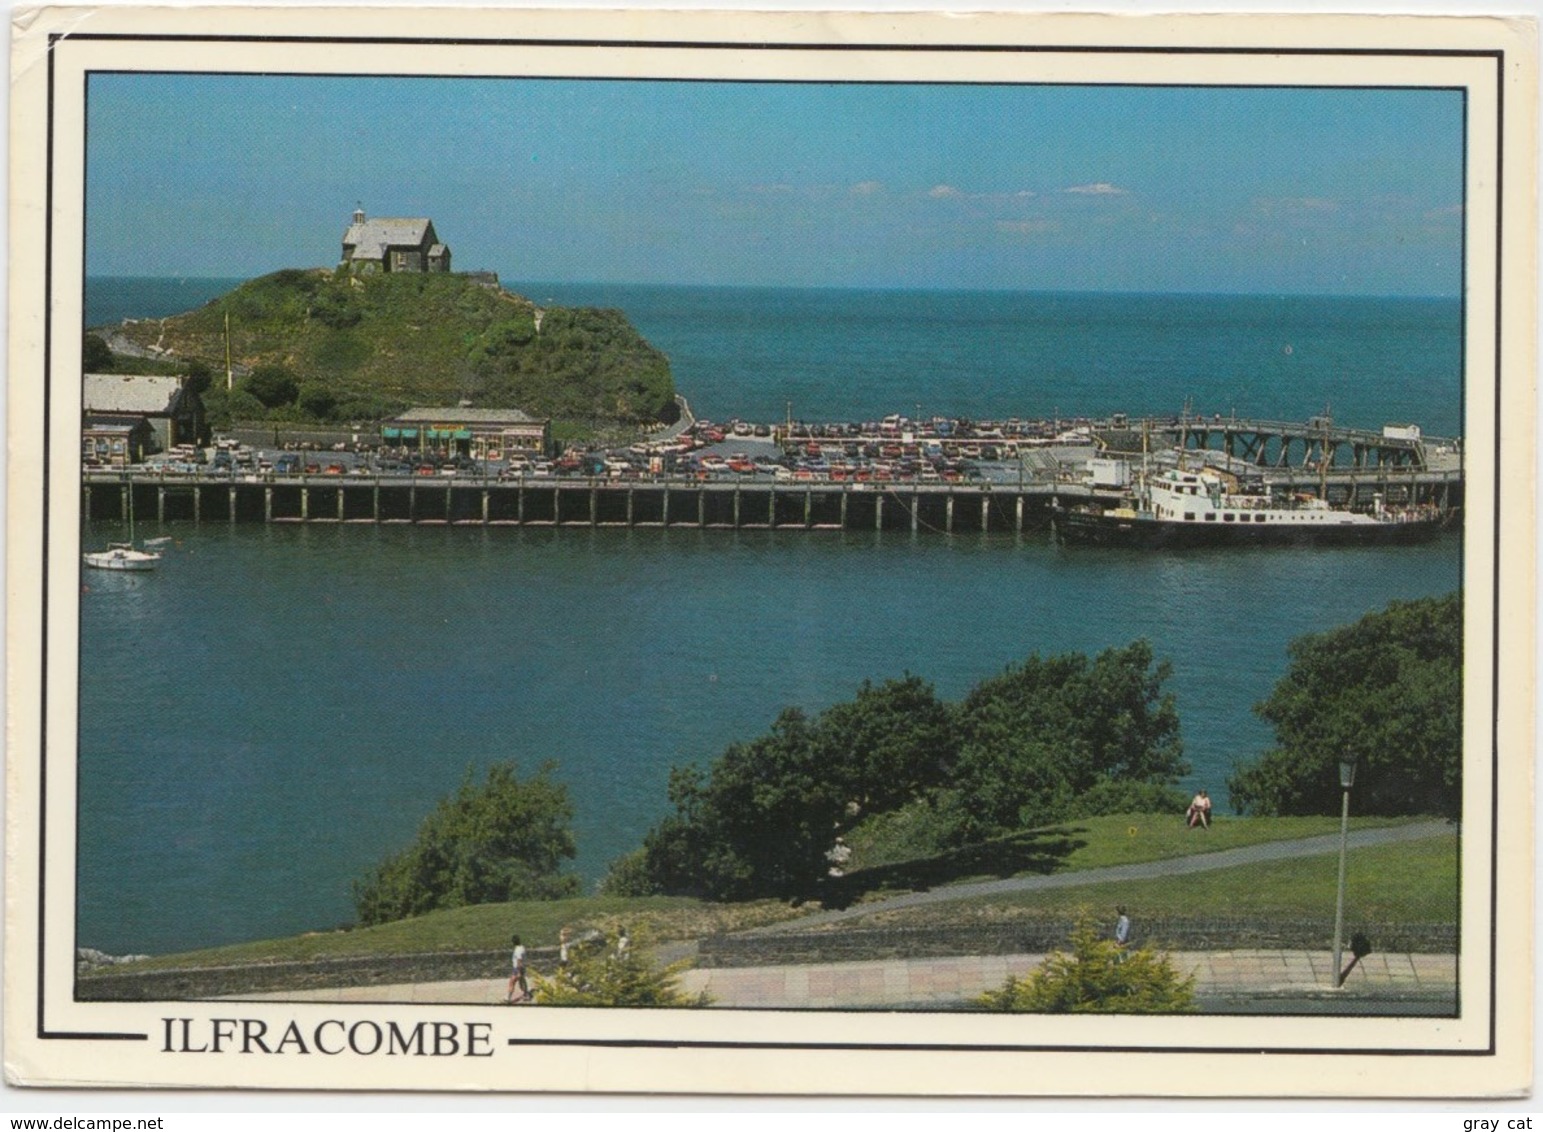 United Kingdom, ILFRACOMBE, Used Postcard [21314] - Ilfracombe